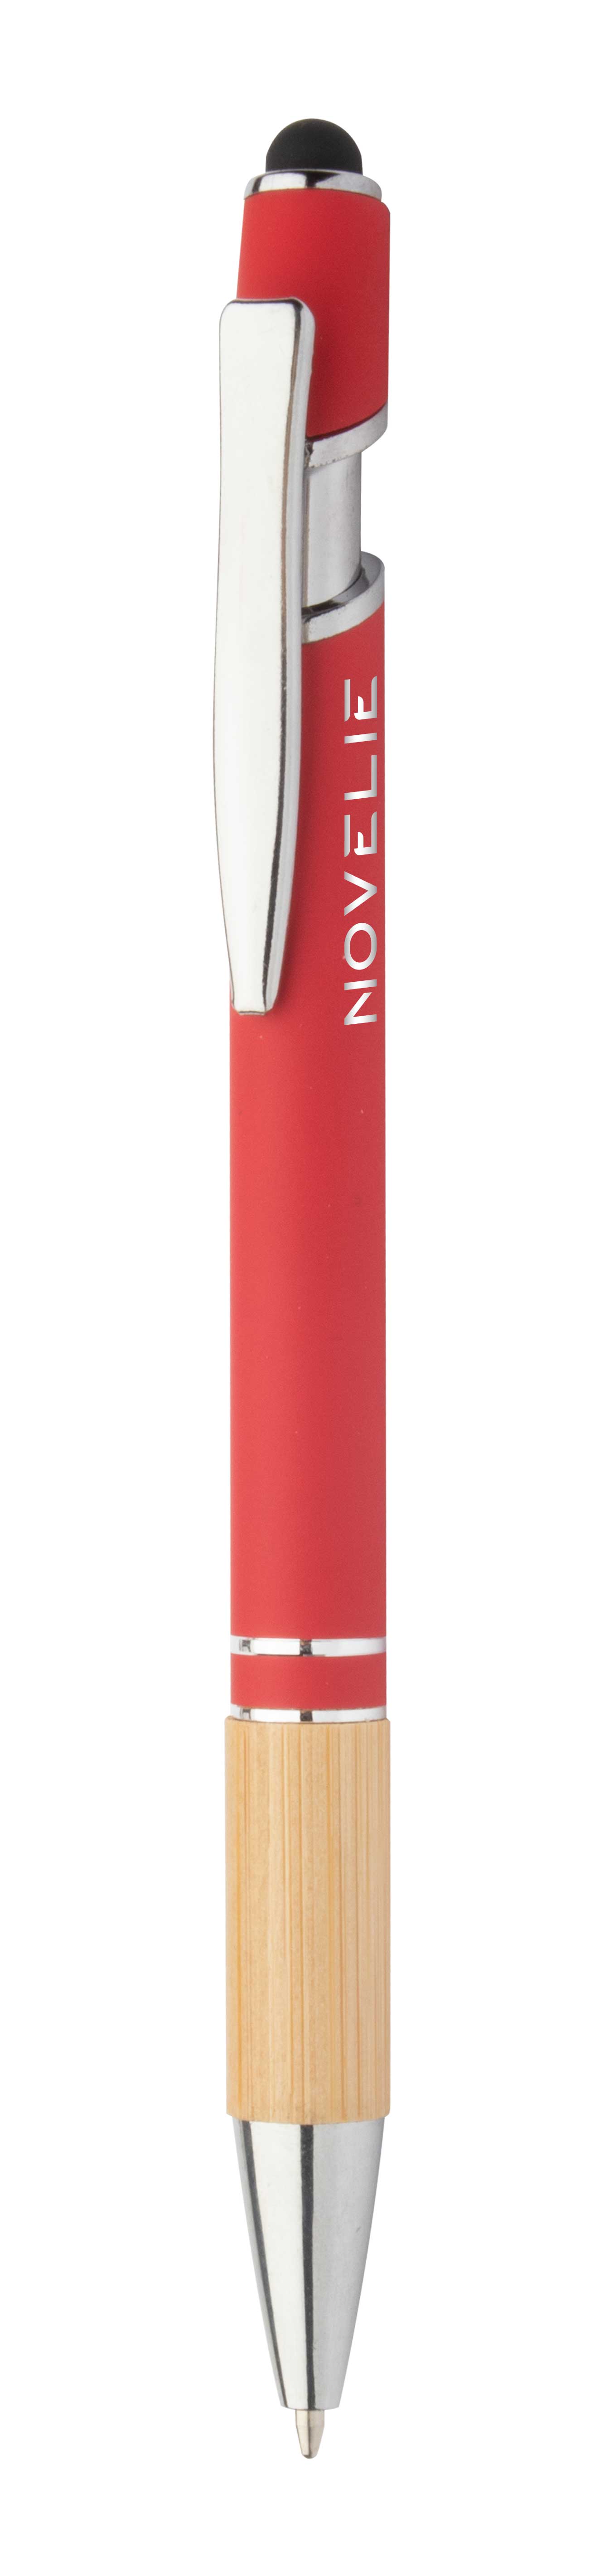 Bonnel touch ballpoint pen - red